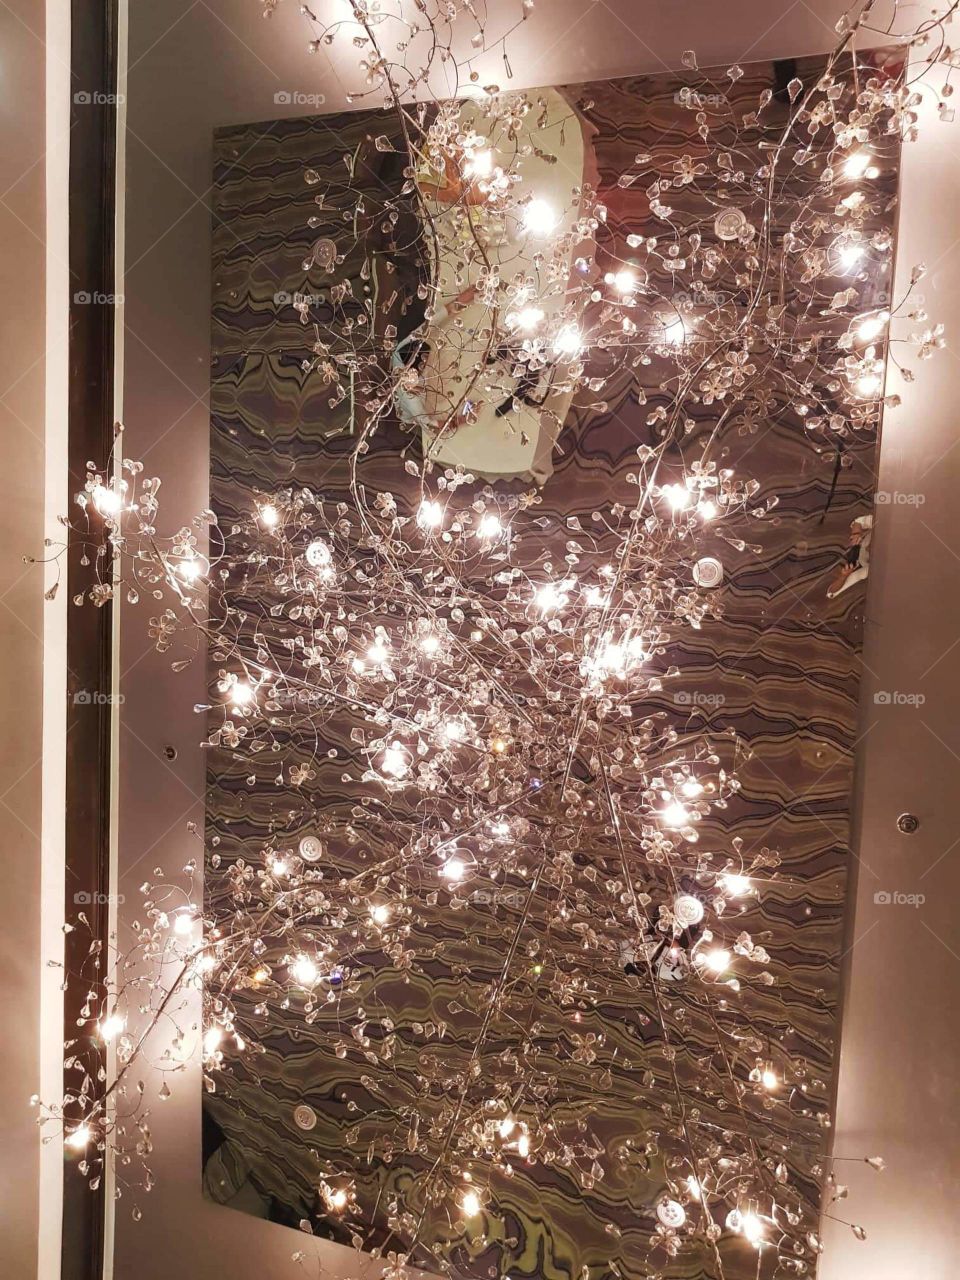 Shining christmas lights for wall decorations.